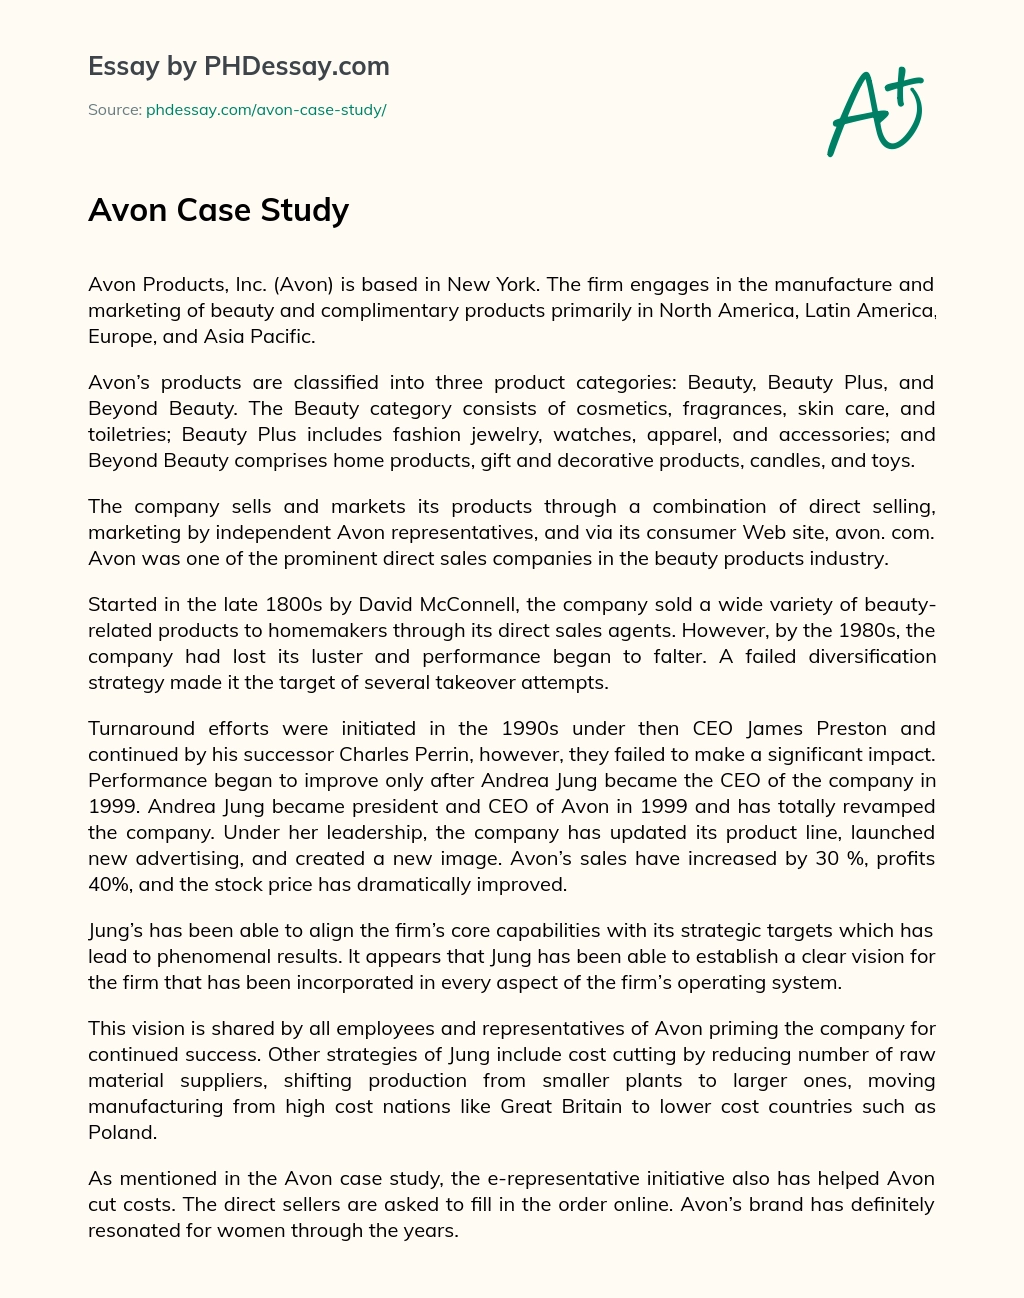 Avon Case Study essay